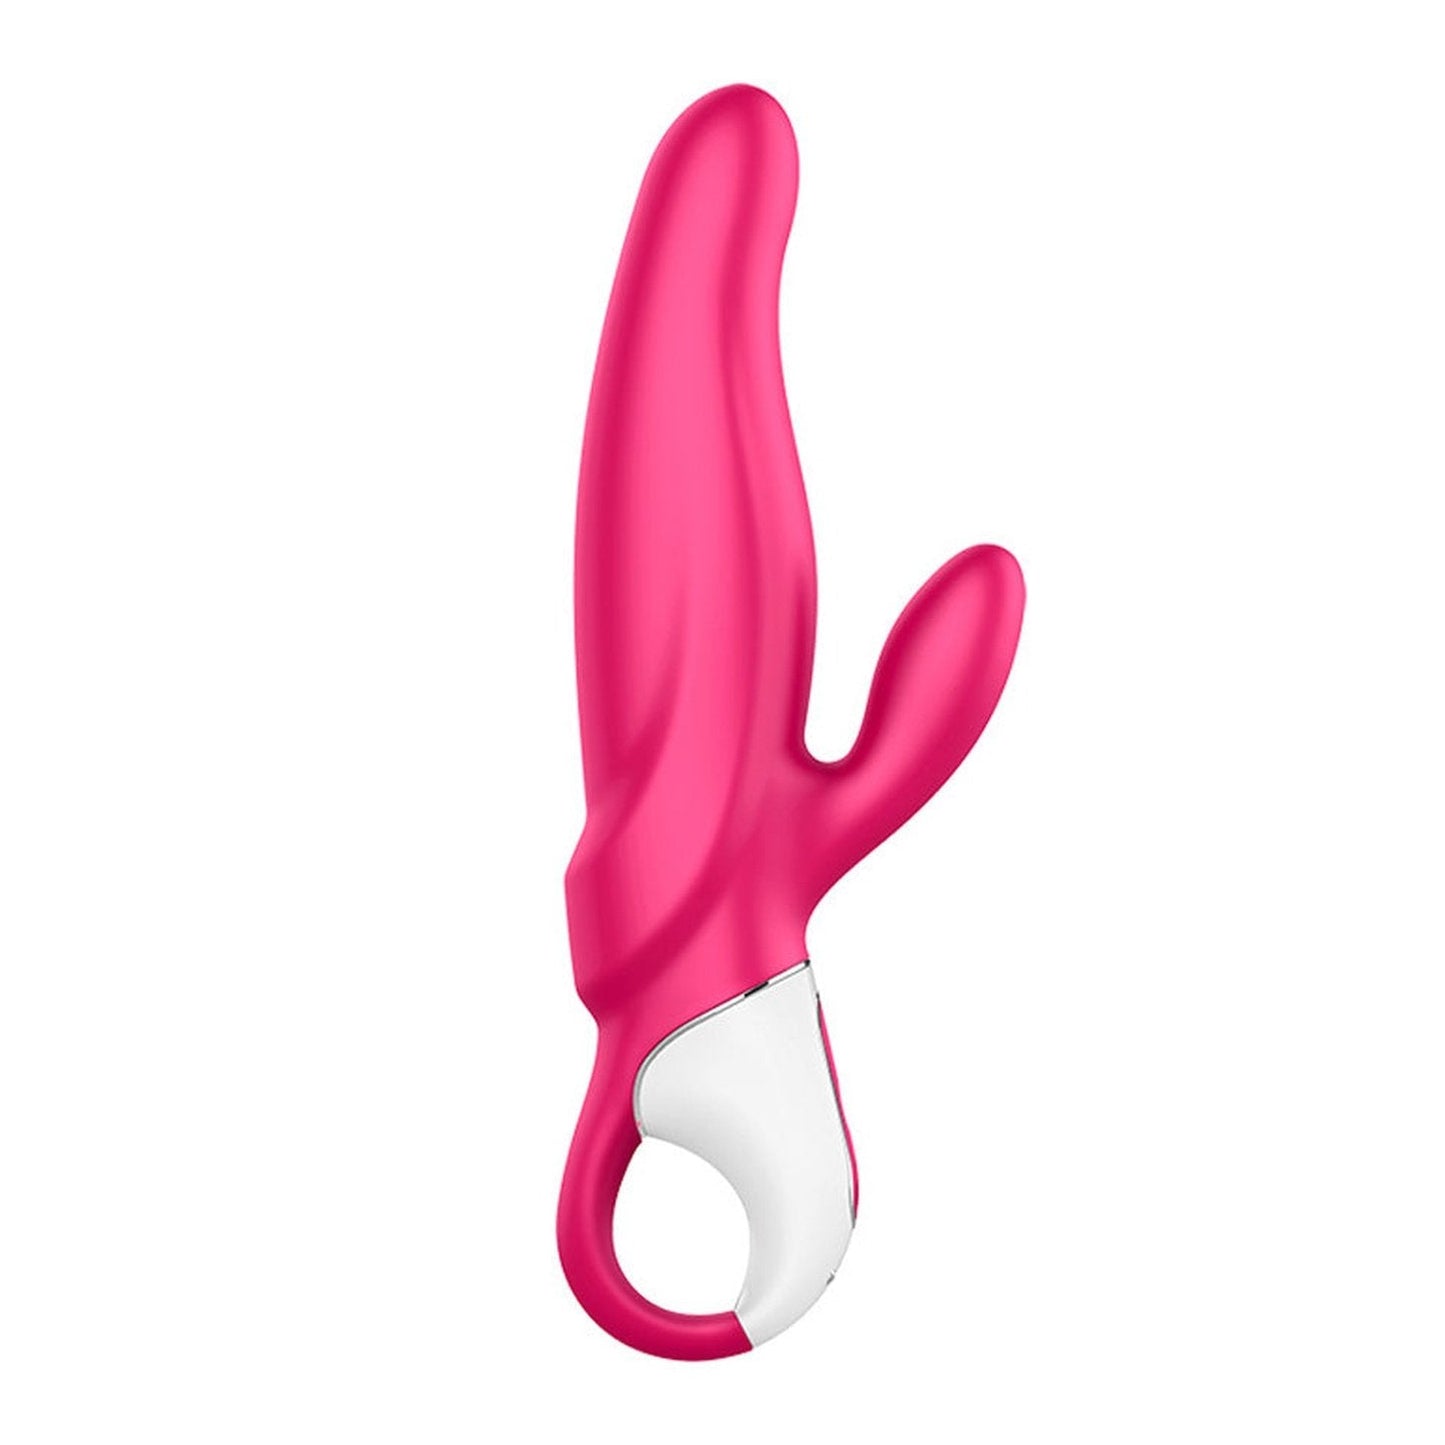 Mr. Rabbit Vibrator - Pink